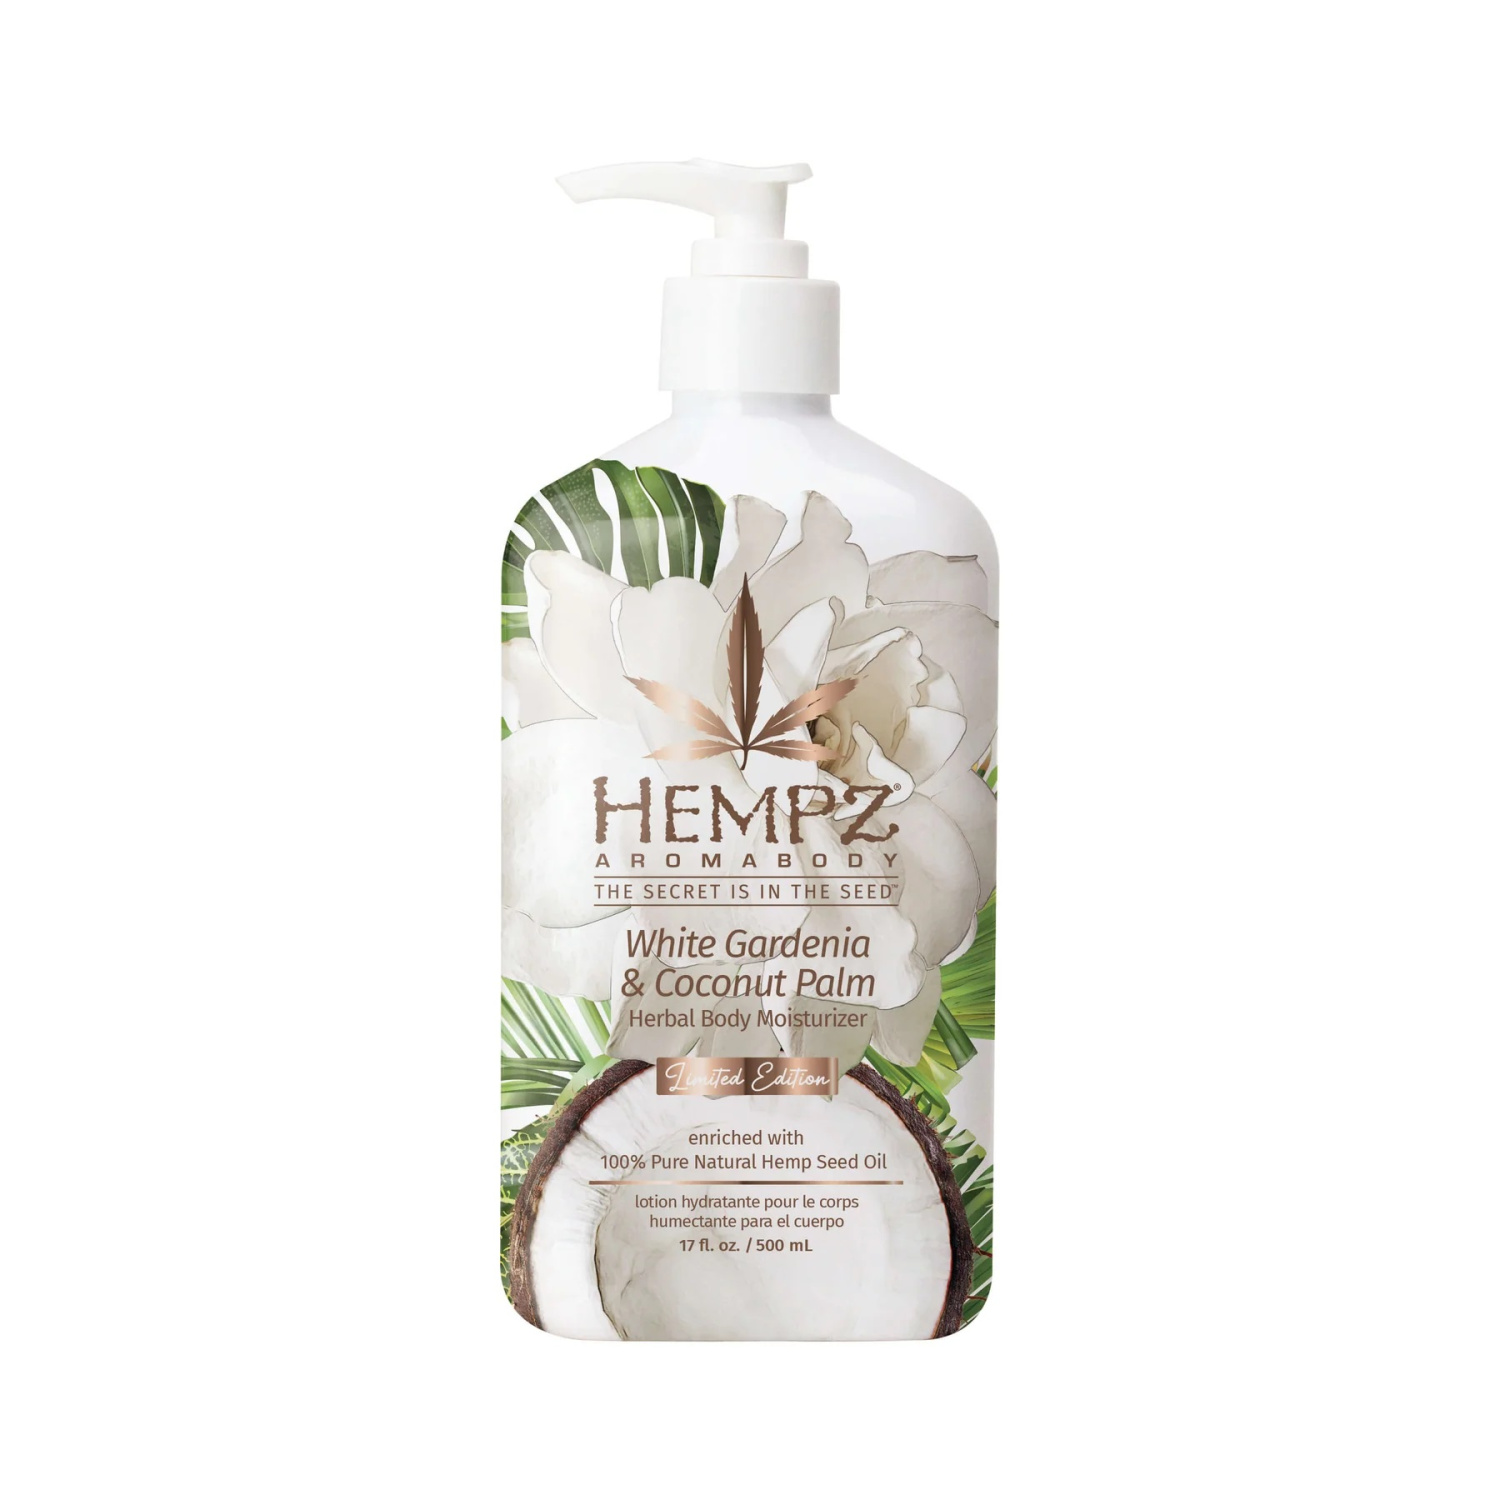 Hempz White Gardenia & Coconut Palm Herbal Body Moisturizer 500ml - интернет-магазин профессиональной косметики Spadream, изображение 48964